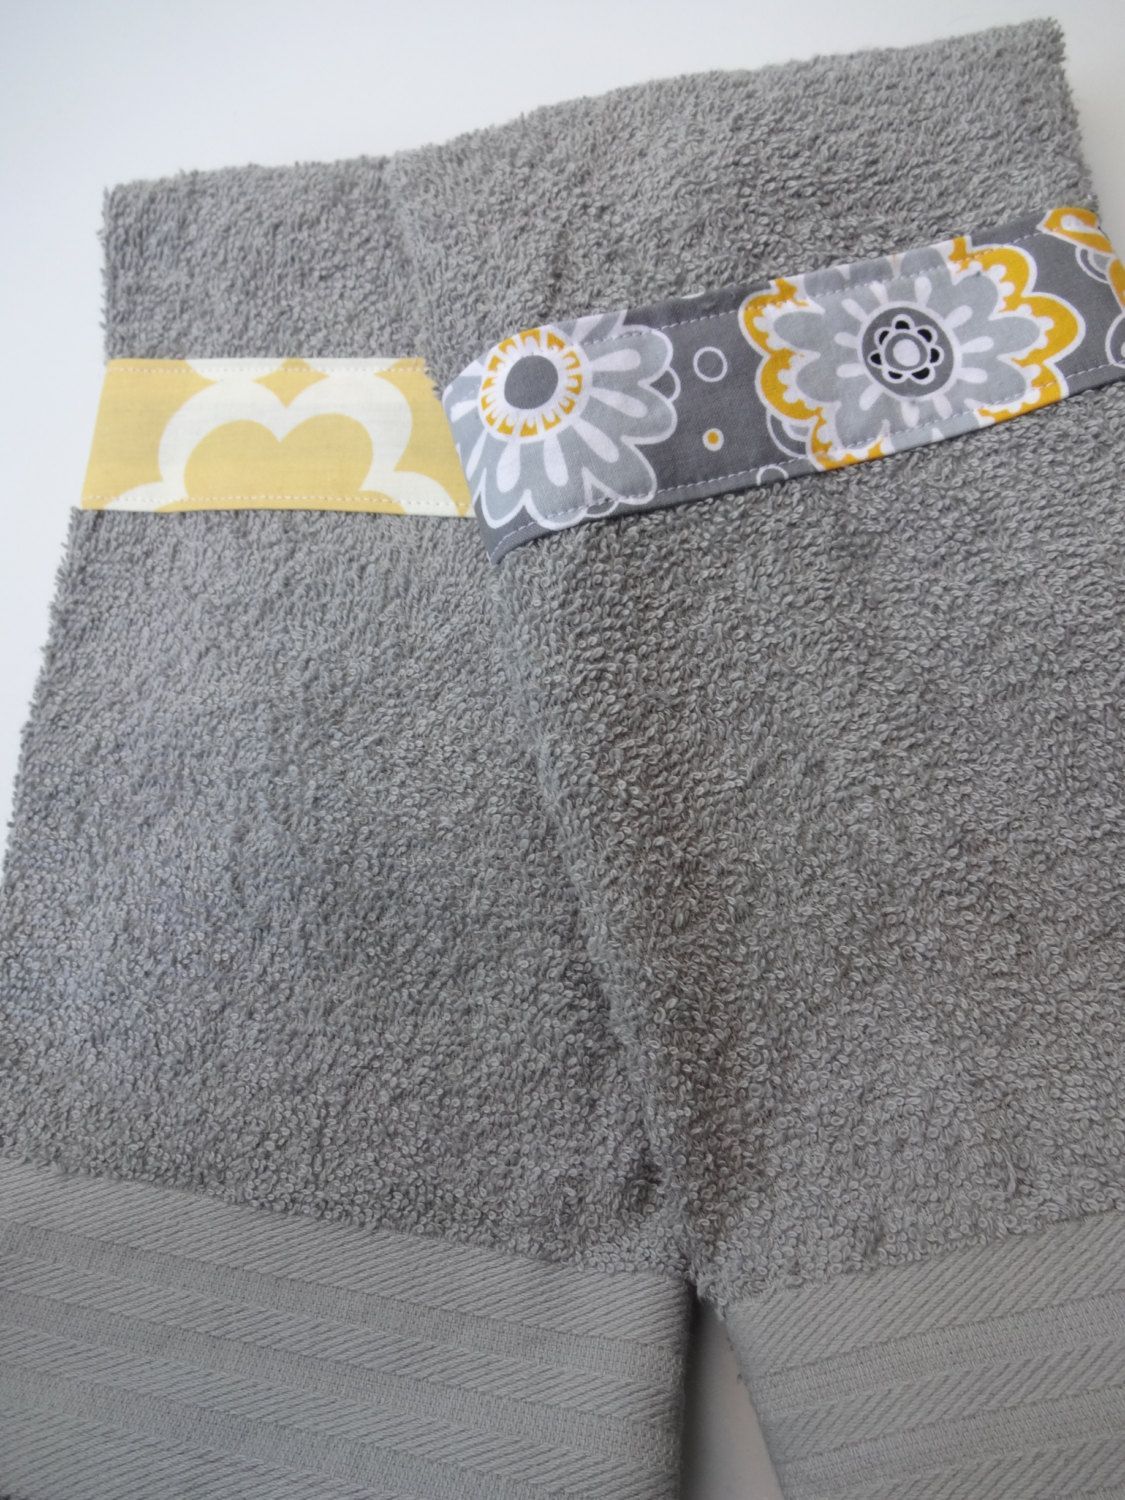 Grey and Yellow bathroom hand towel with StayPut snaps, hanging towel, Yellow ba